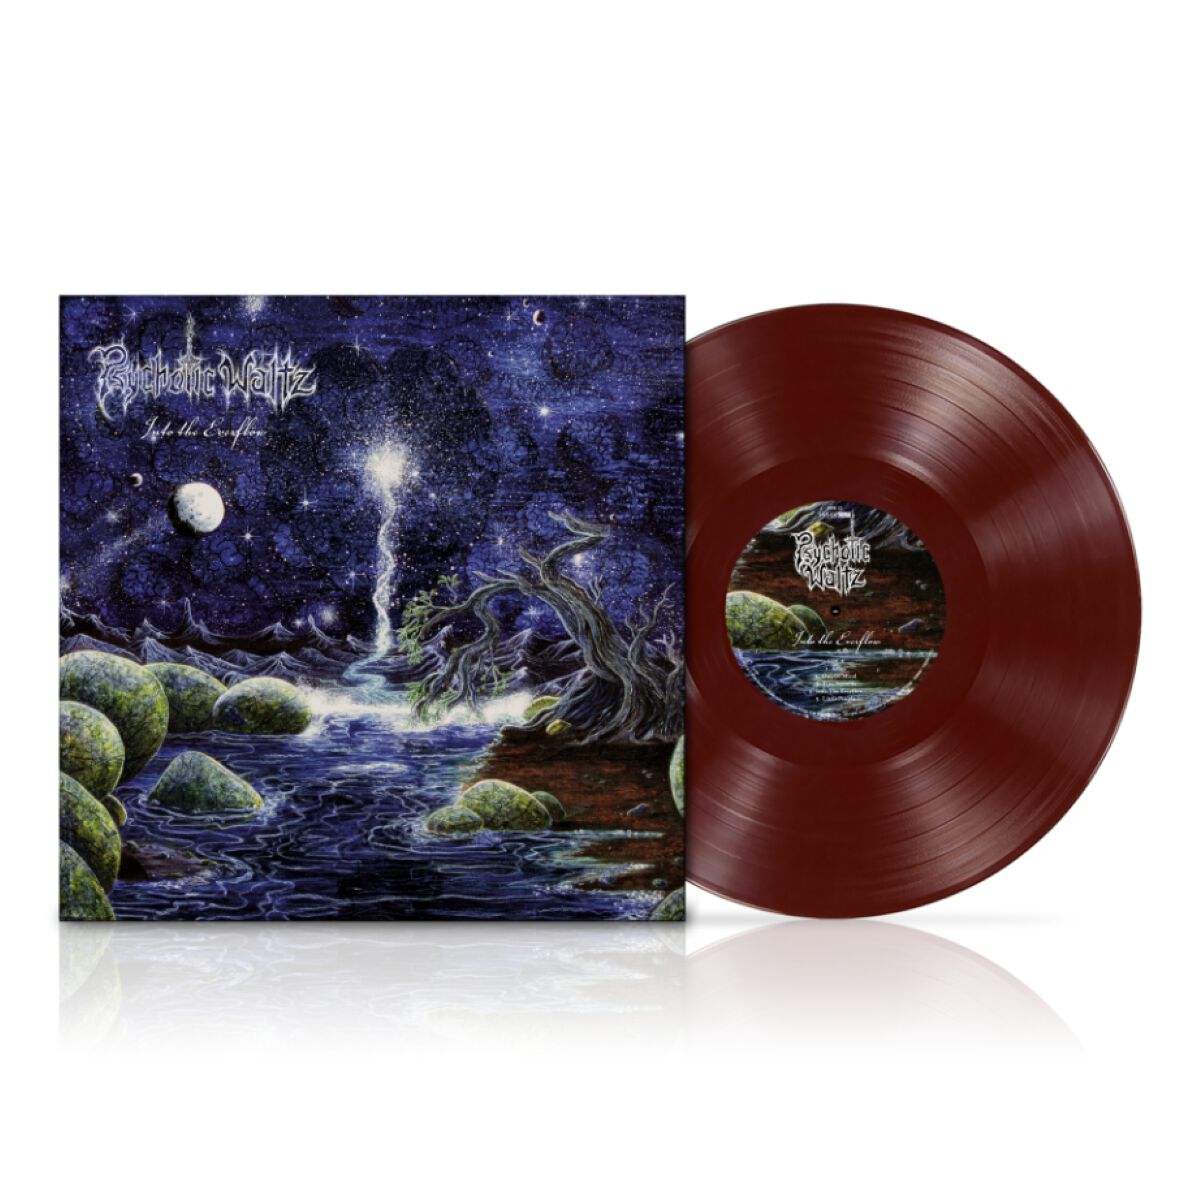 Into the everflow von Psychotic Waltz - LP (Coloured, Limited Edition, Re-Release, Standard)